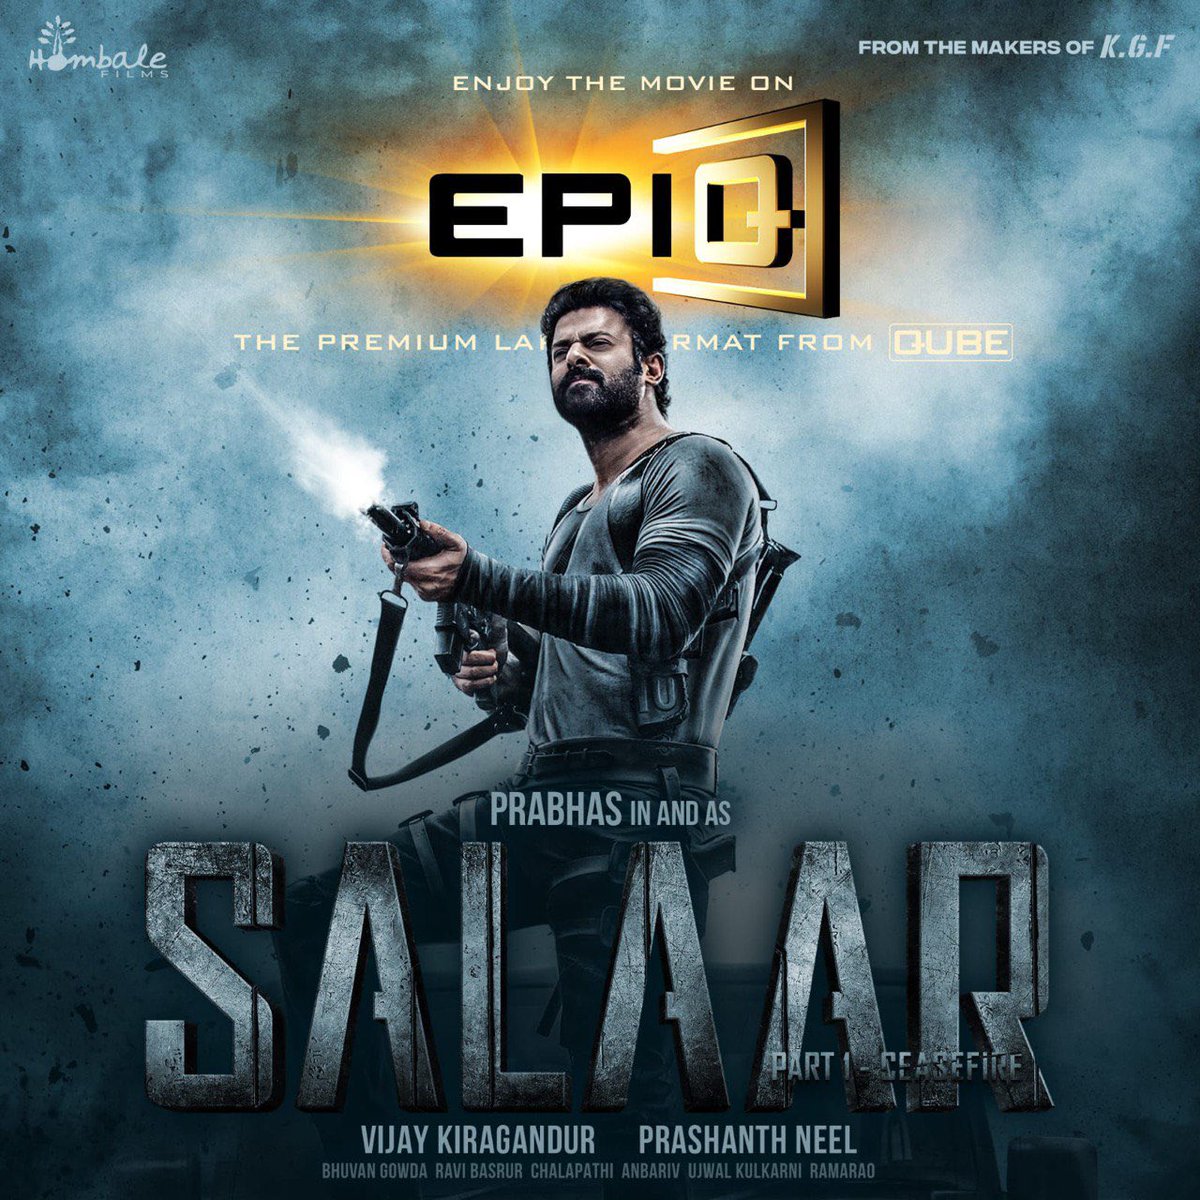 Experience the #Salaar at V Epiq in Sullurpeta, Asia's largest cinema screen. 💥💥💥

#Prabhas